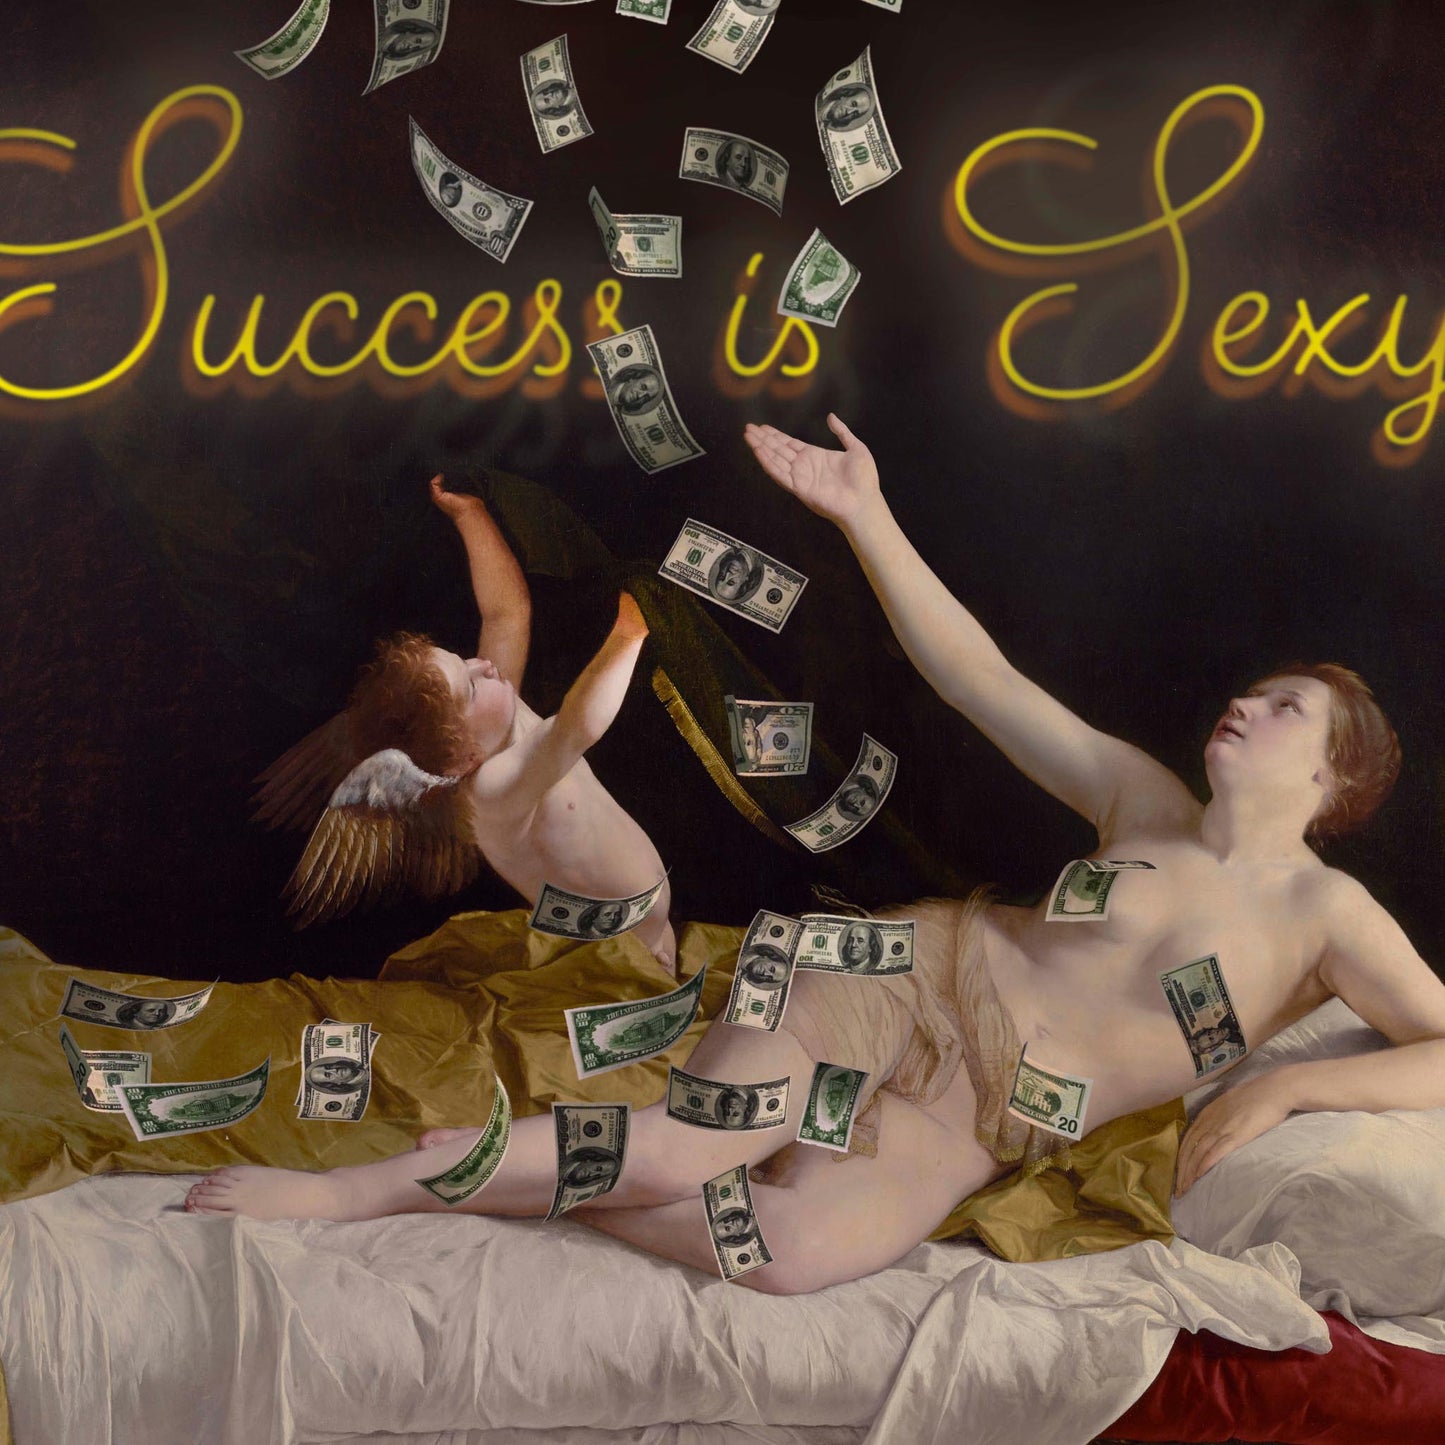 "Success Is Sexy" fine art print